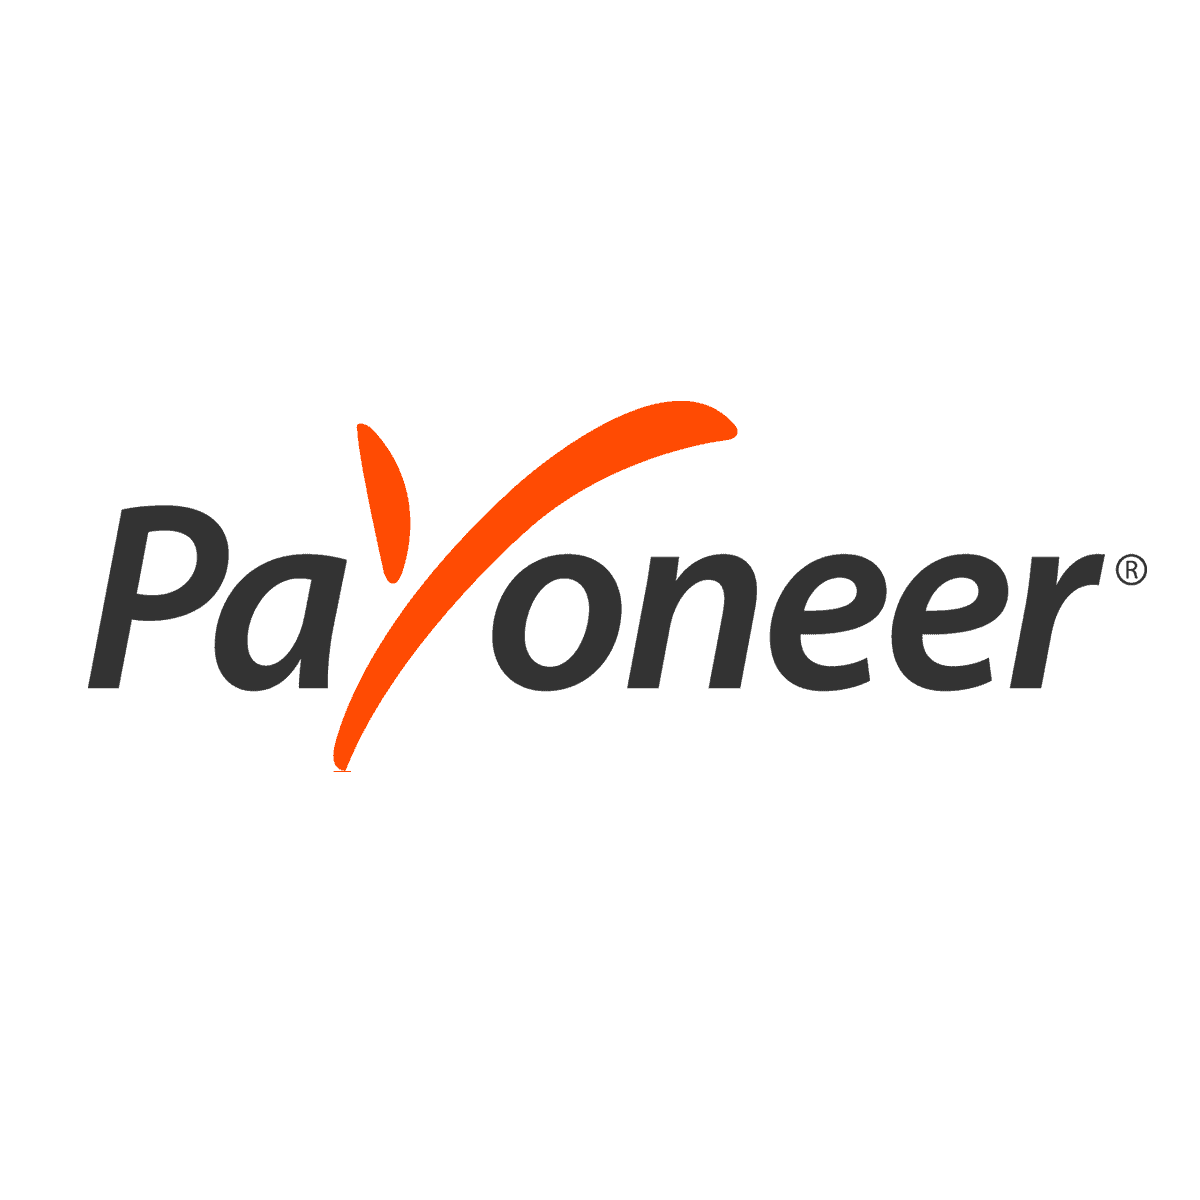 Payoneer Referral Bonus: